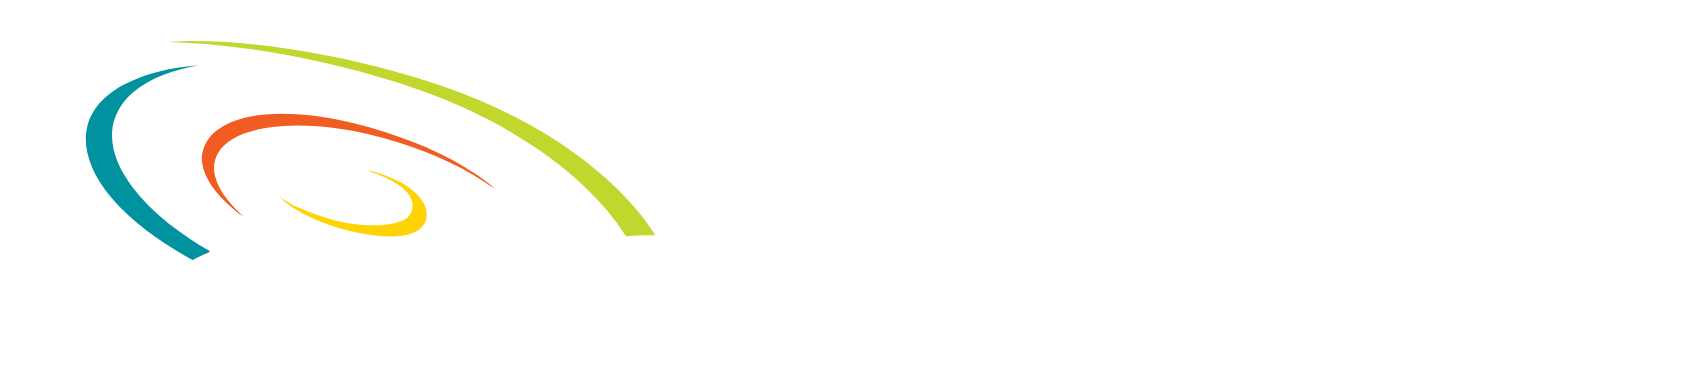 Concentrix Logo groß für dunkle Hintergründe (transparentes PNG)